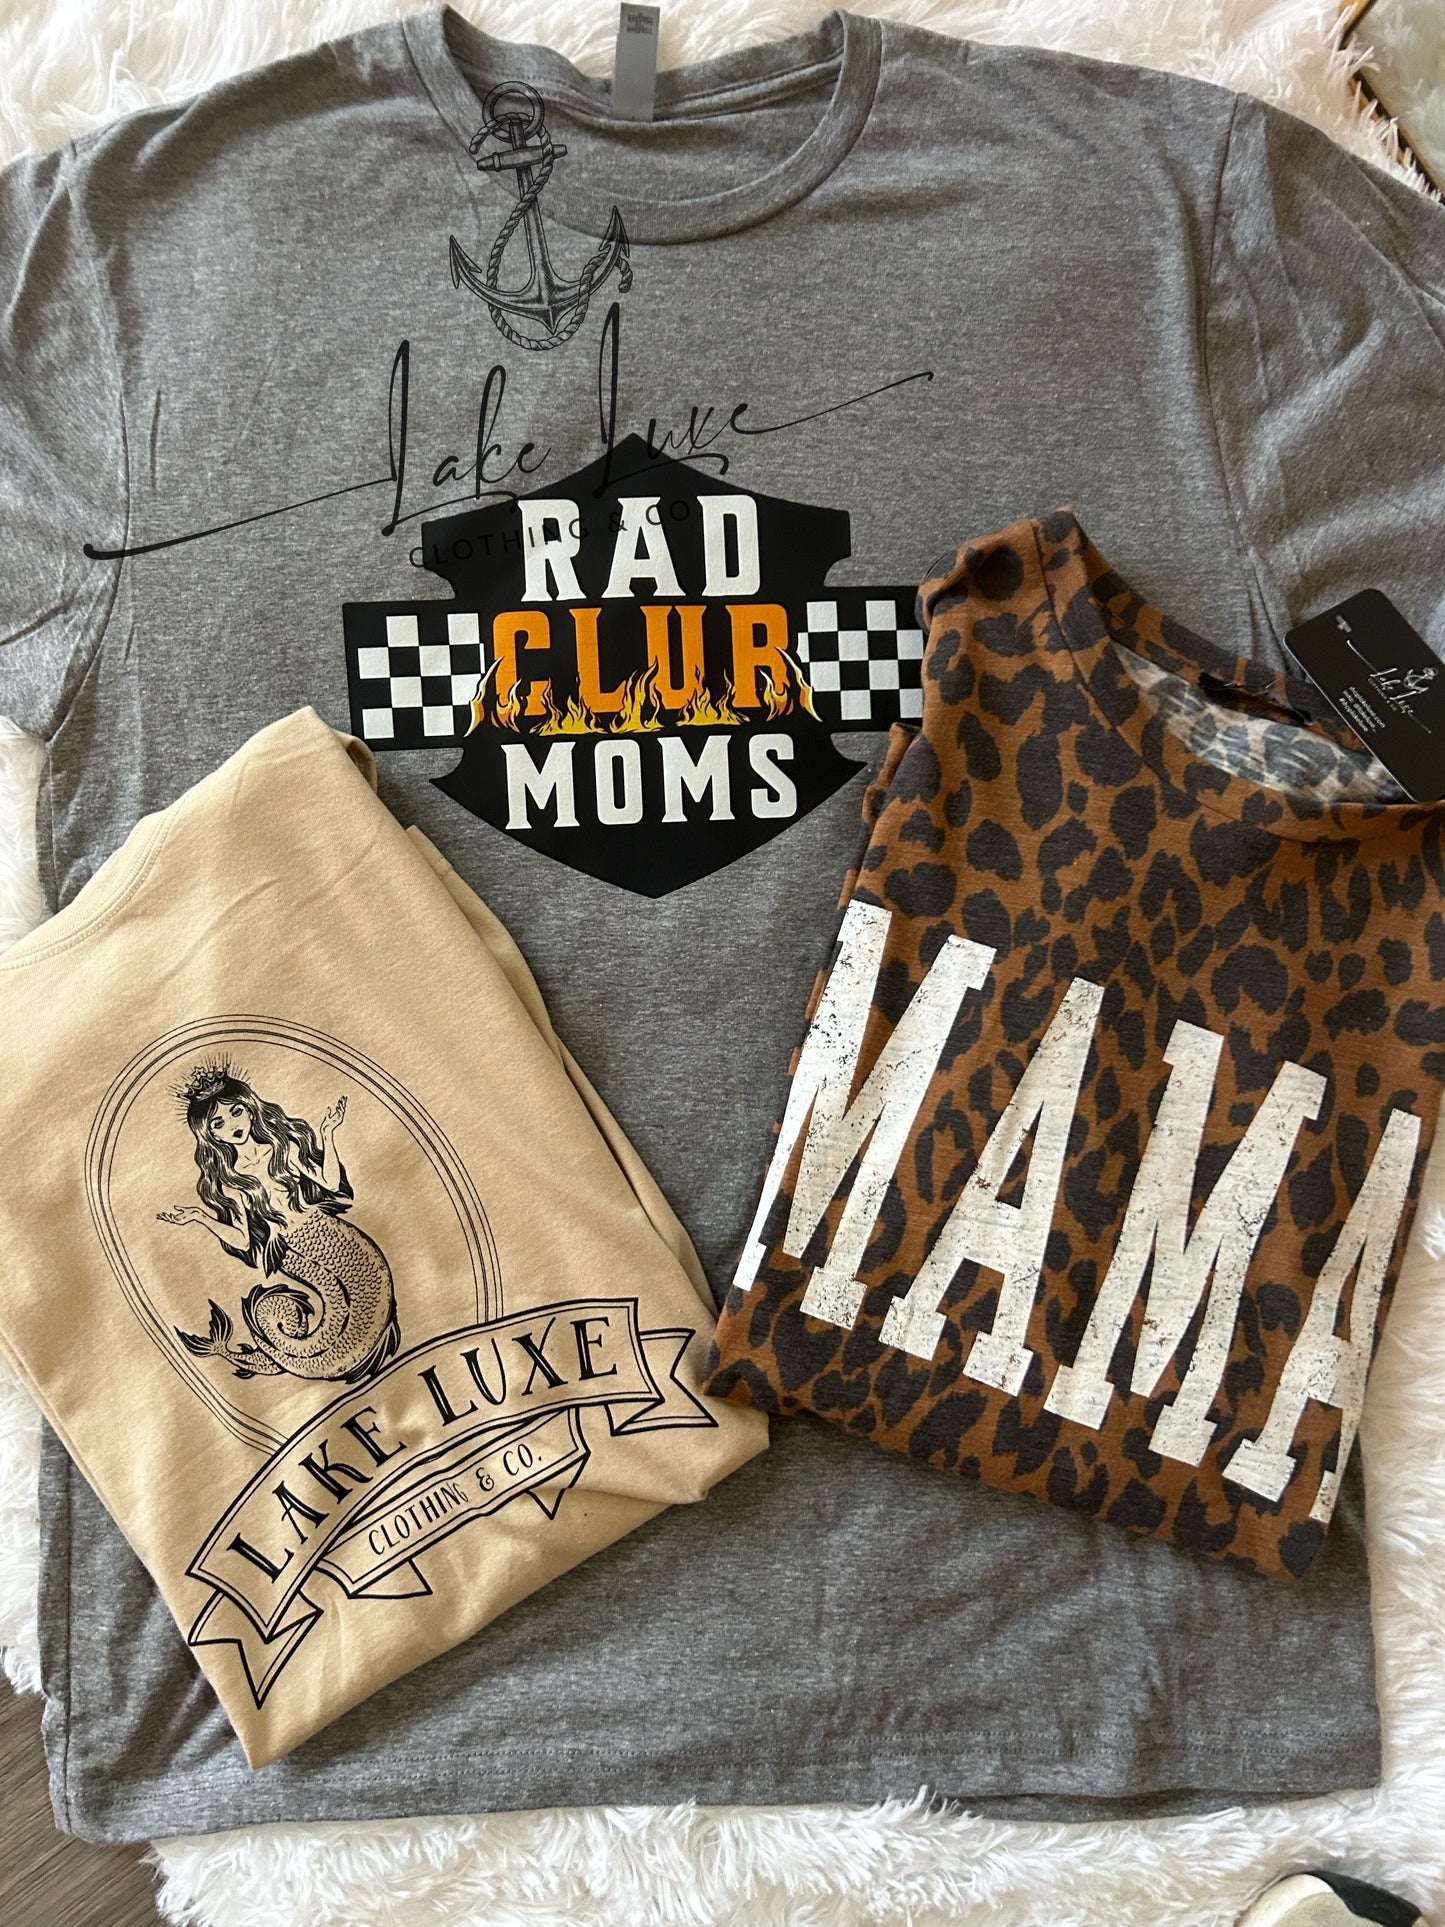 Rad Moms Club tee - made to order